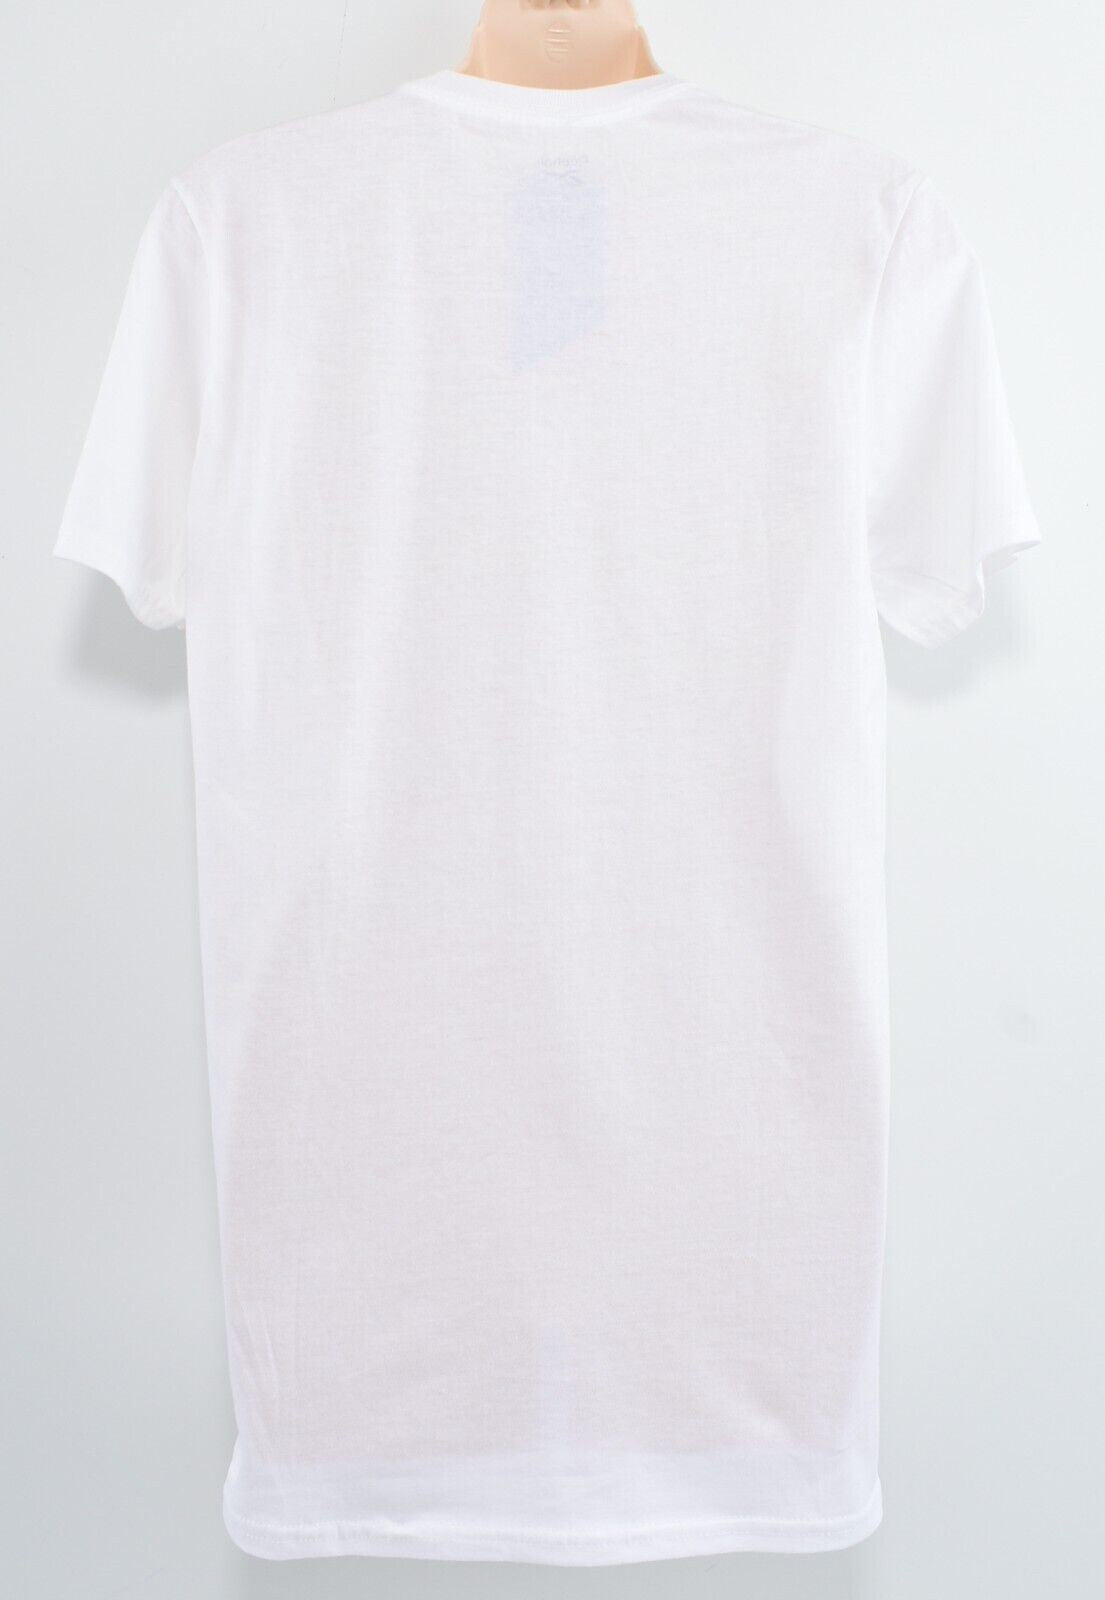 REEBOK Women's DUBAI Logo Crew Neck T-shirt, White, size S /UK 10